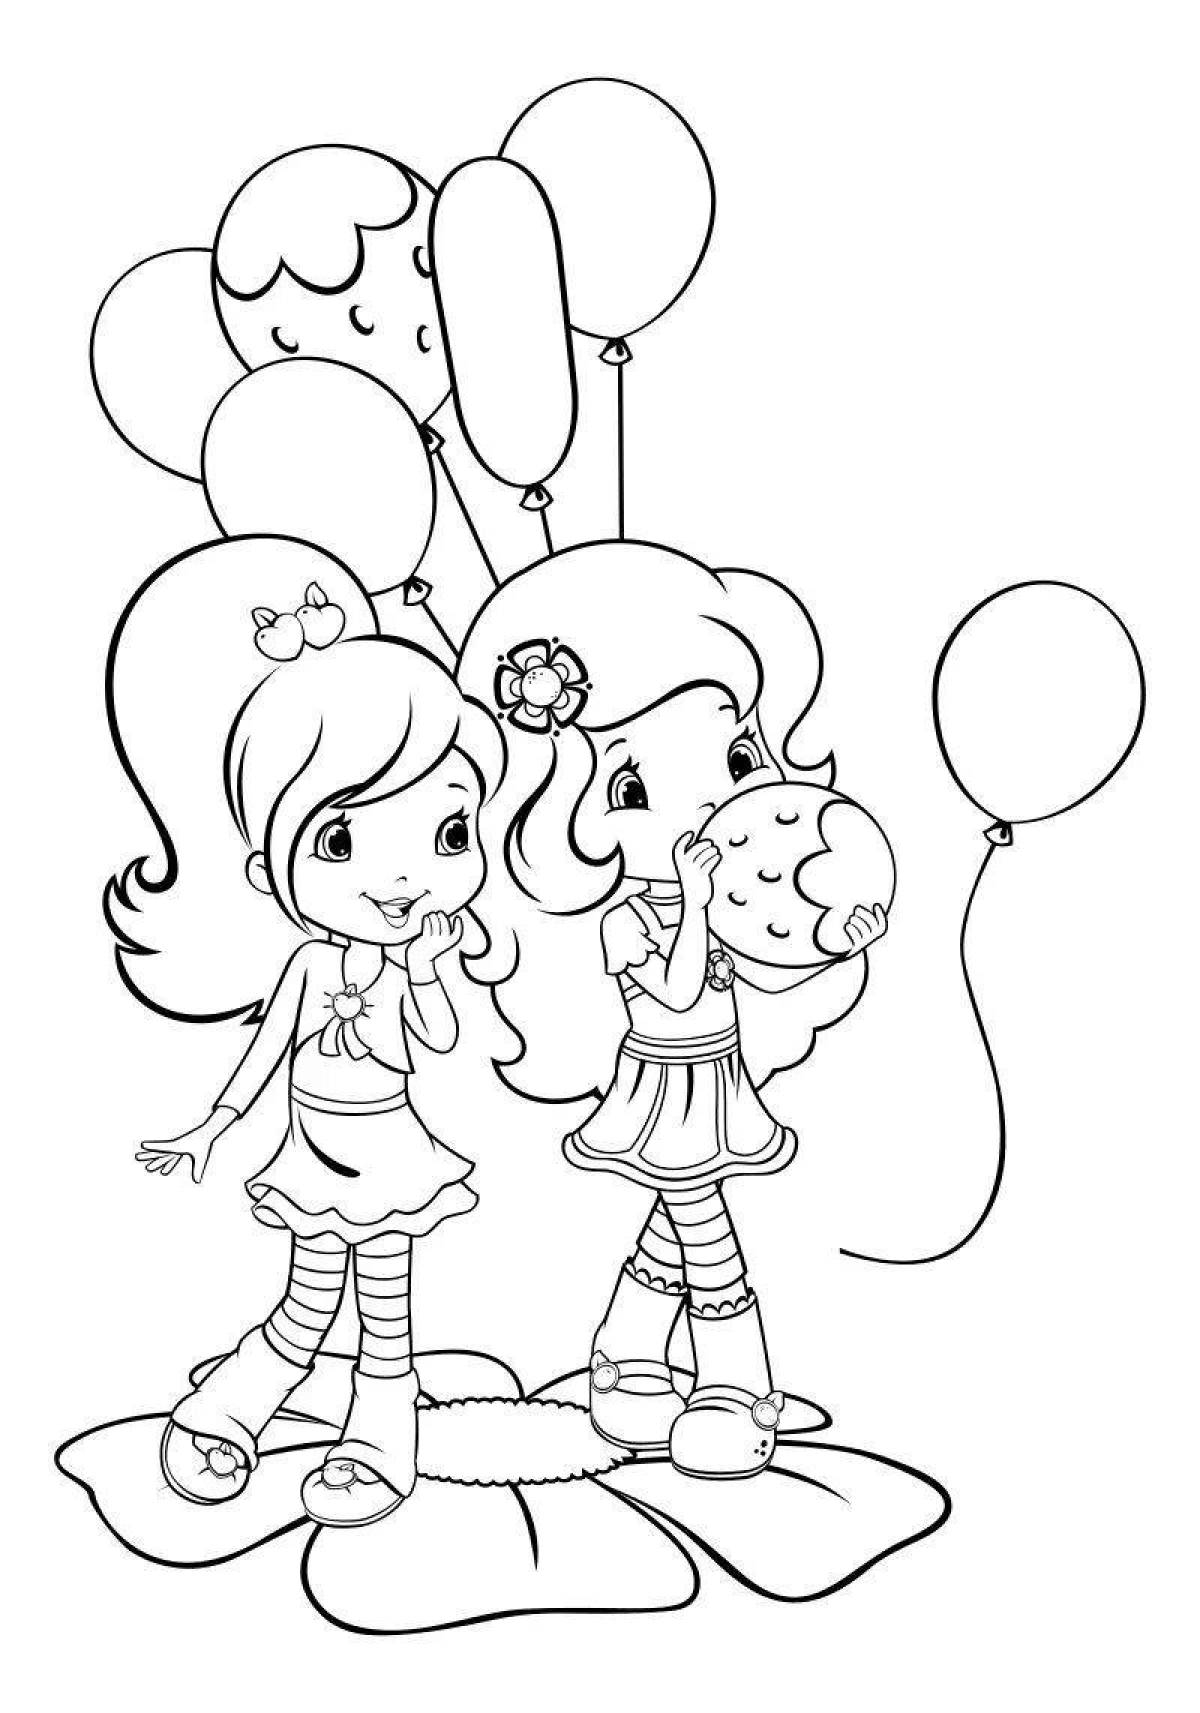 Shine coloring girl with balloons